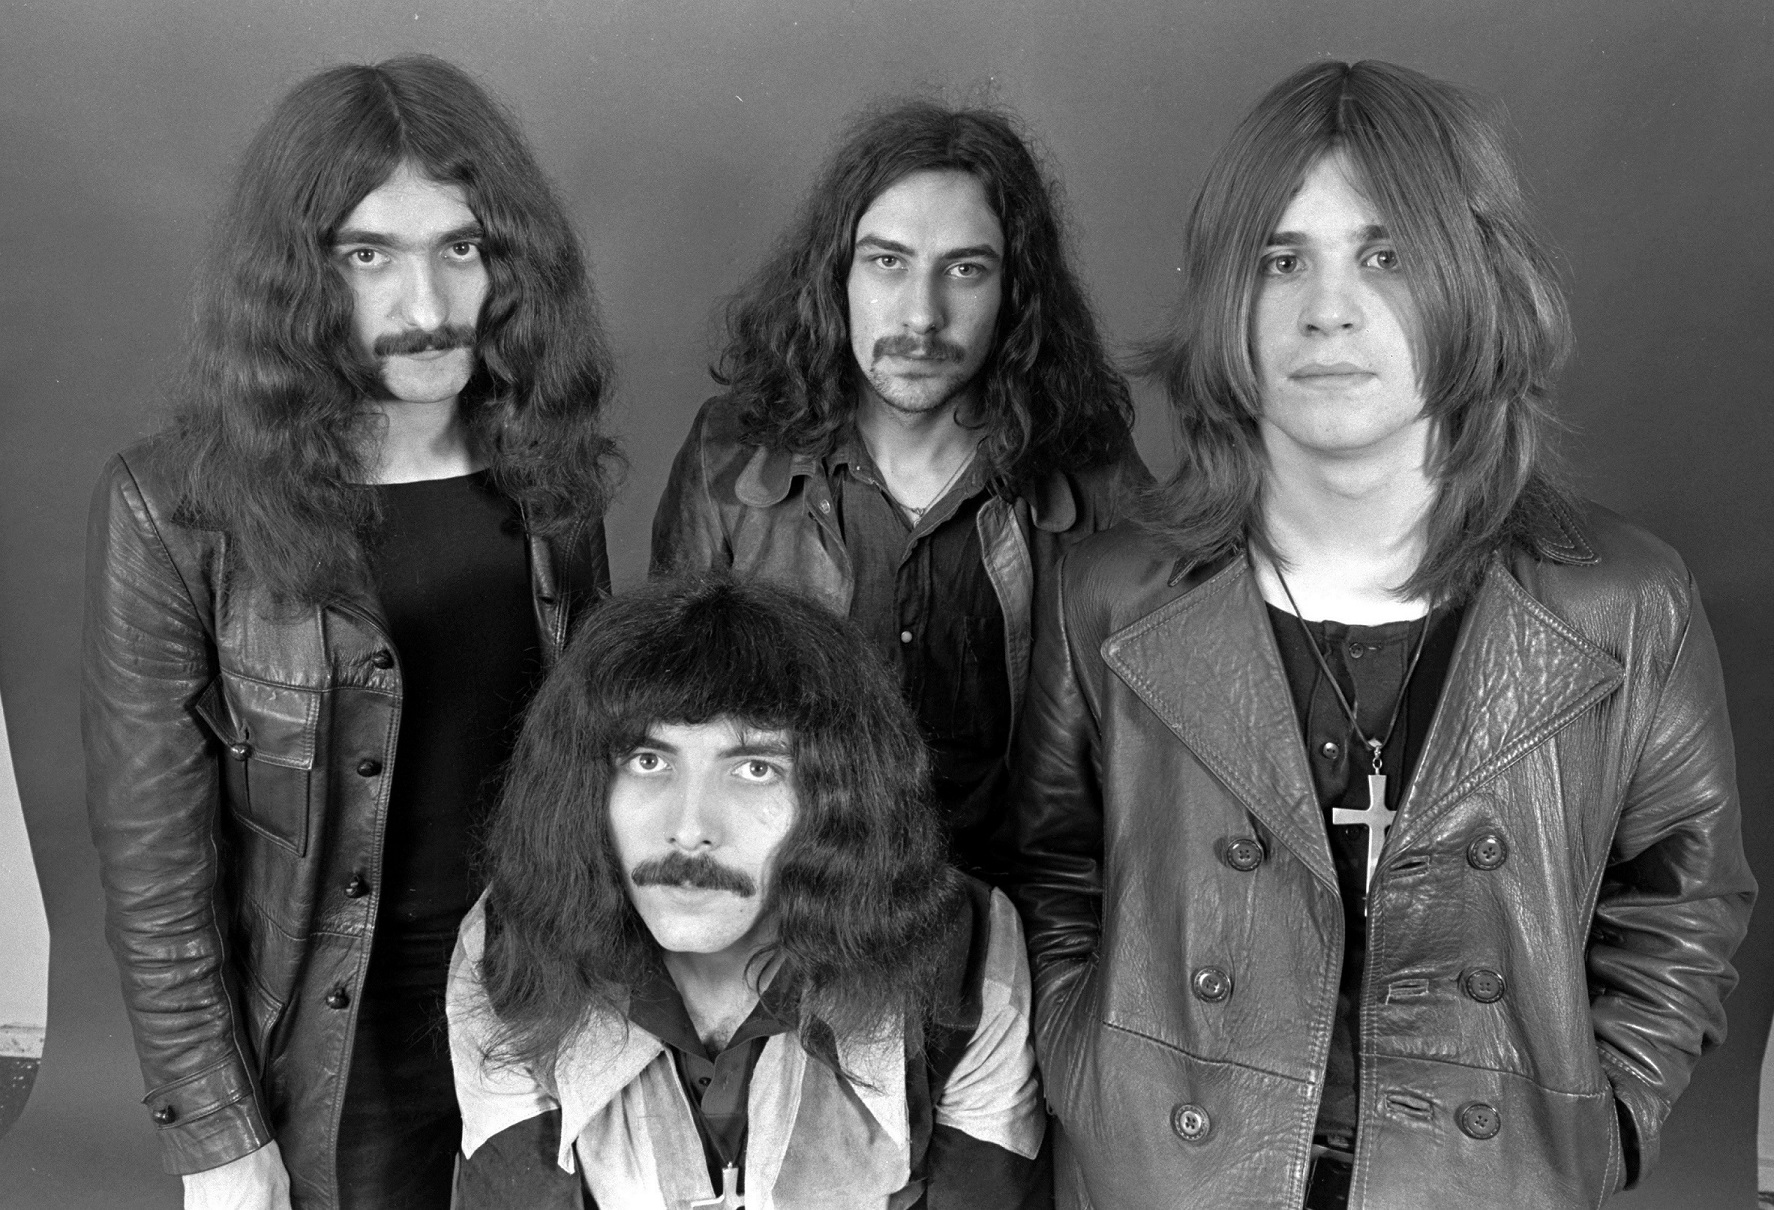 Check Out Below The Best Black Sabbath Wallpaper